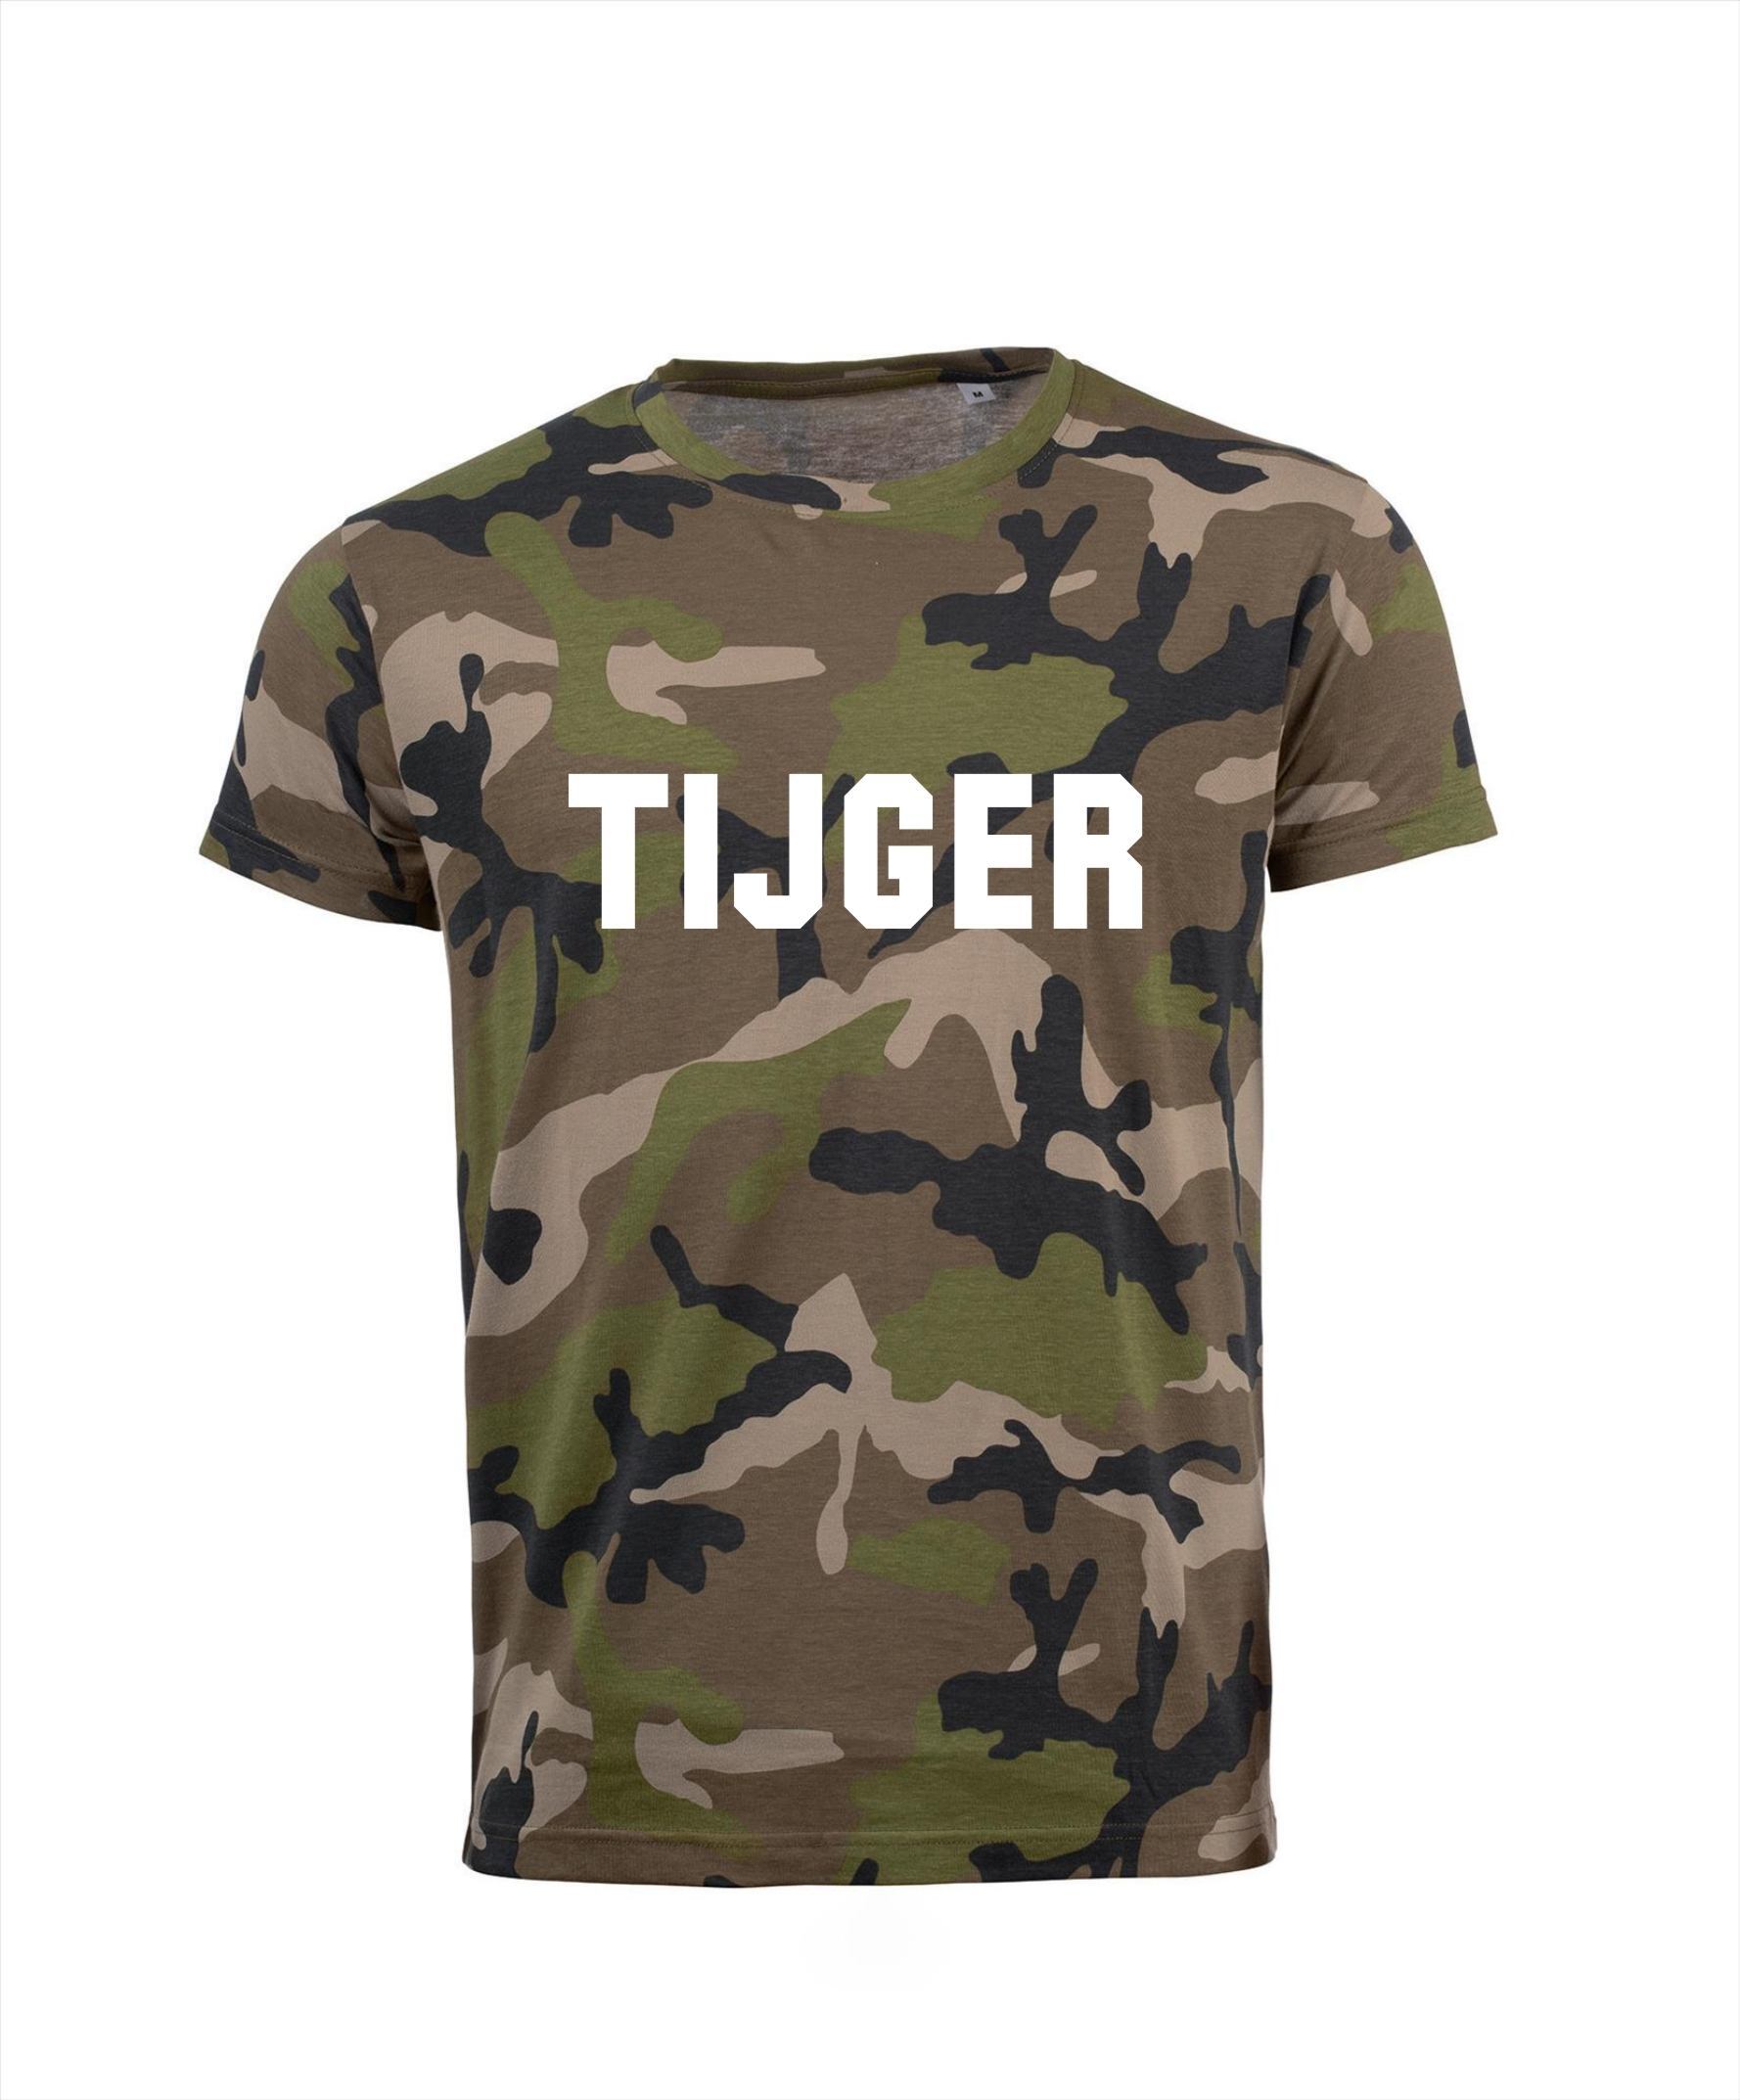 Tijger T-shirt camouflage legergroen